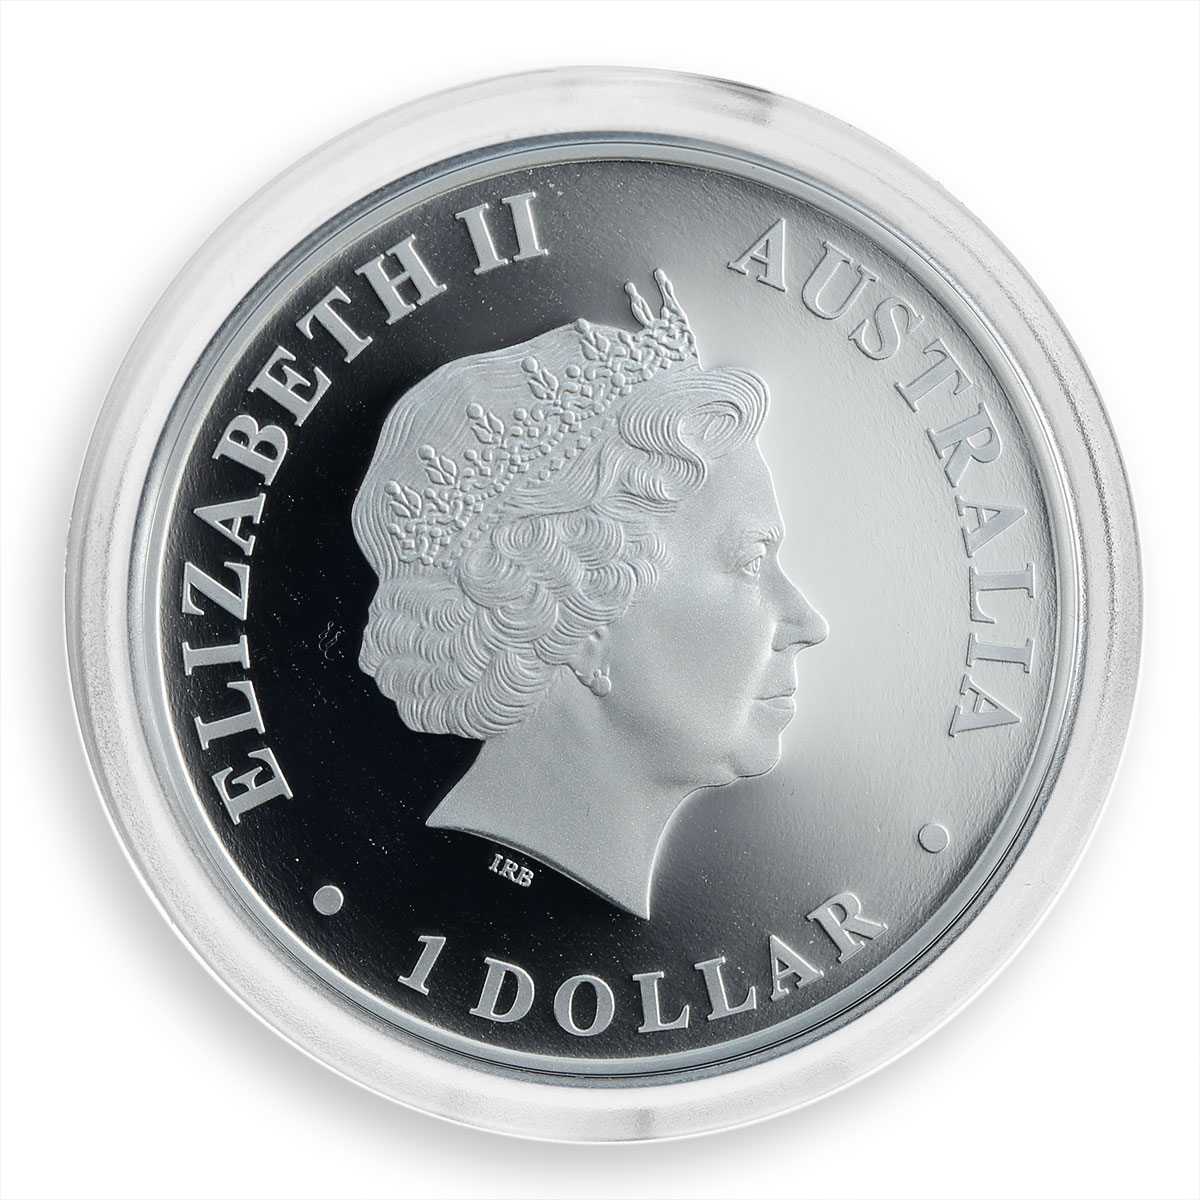 Australia 1 dollar Lizard Dicover Australia color proof coin 2010